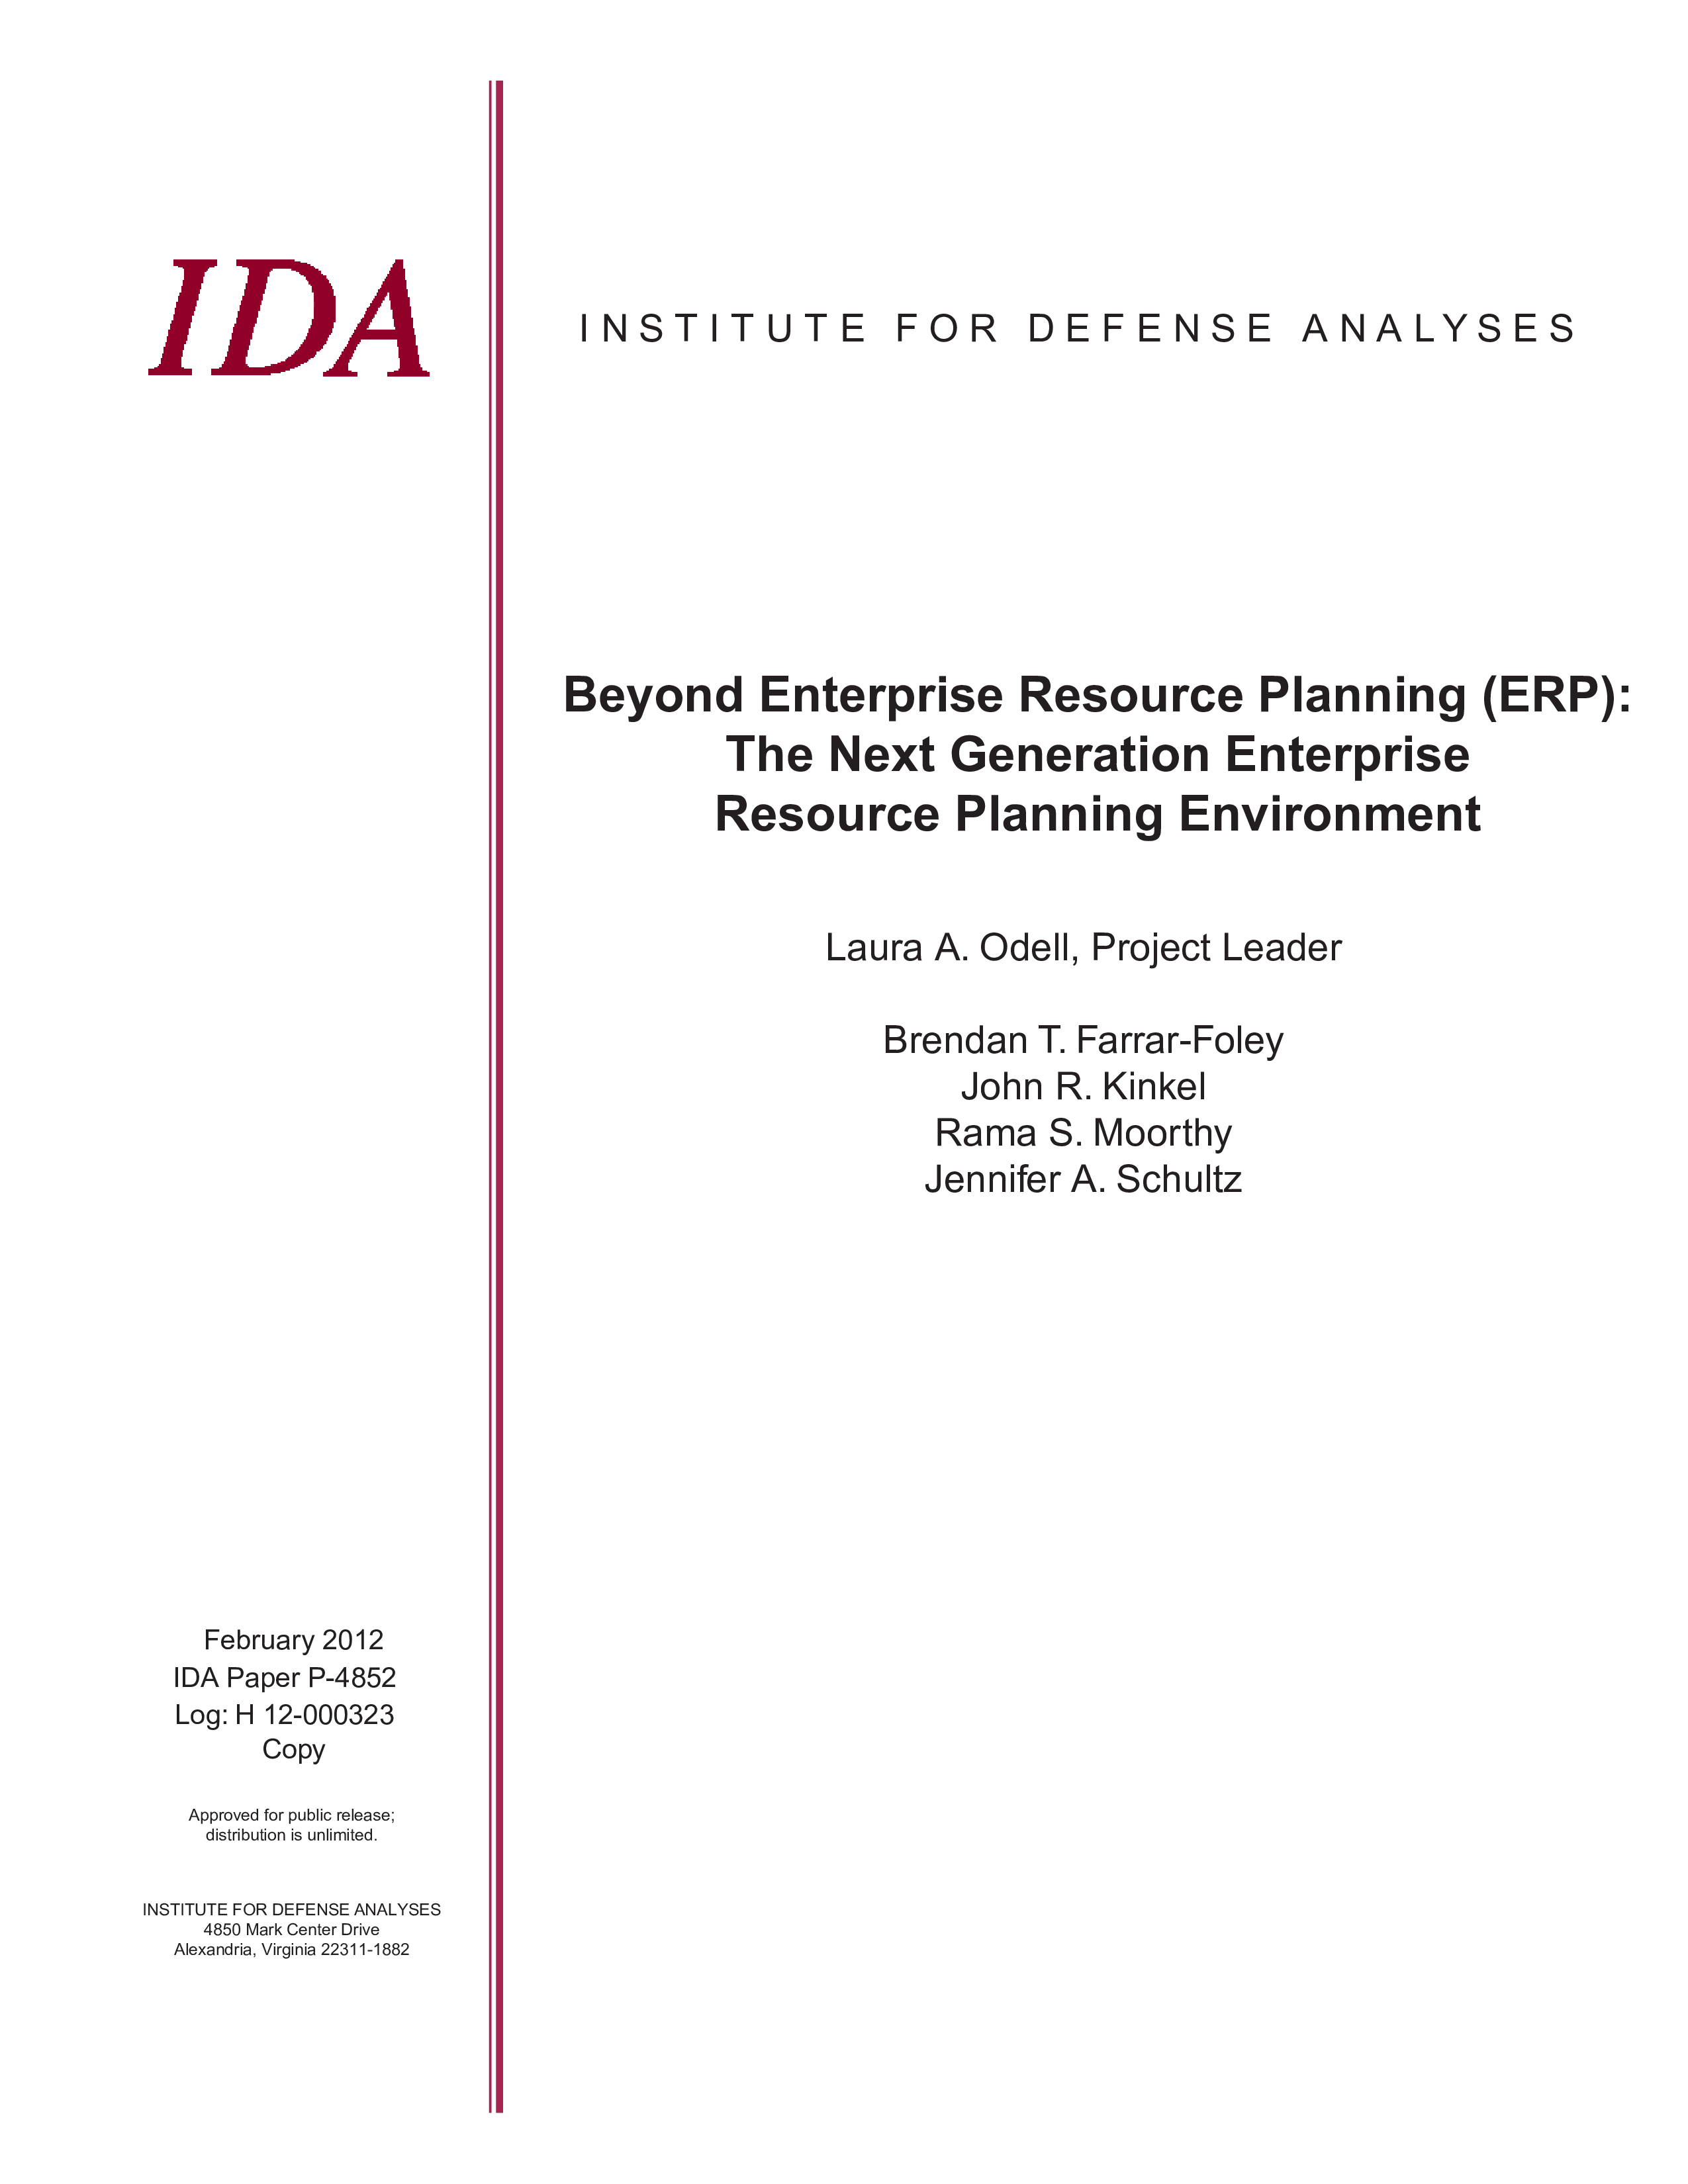 Beyond Enterprise Resource Planning (ERP): The Next Generation Enterprise Resource Planning Environment